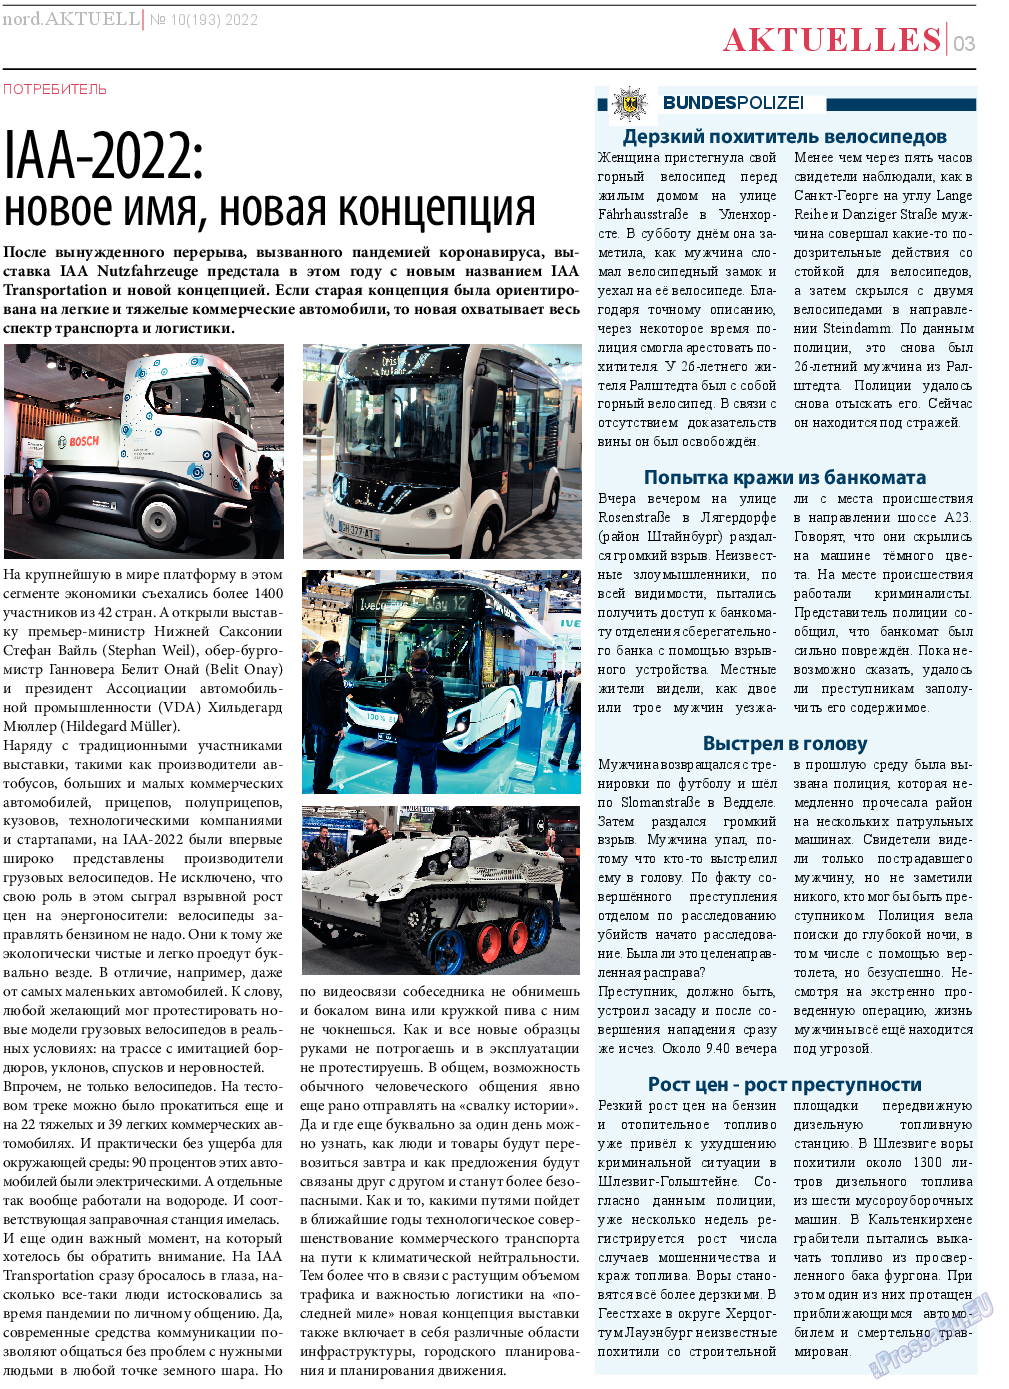 nord.Aktuell, газета. 2022 №10 стр.3